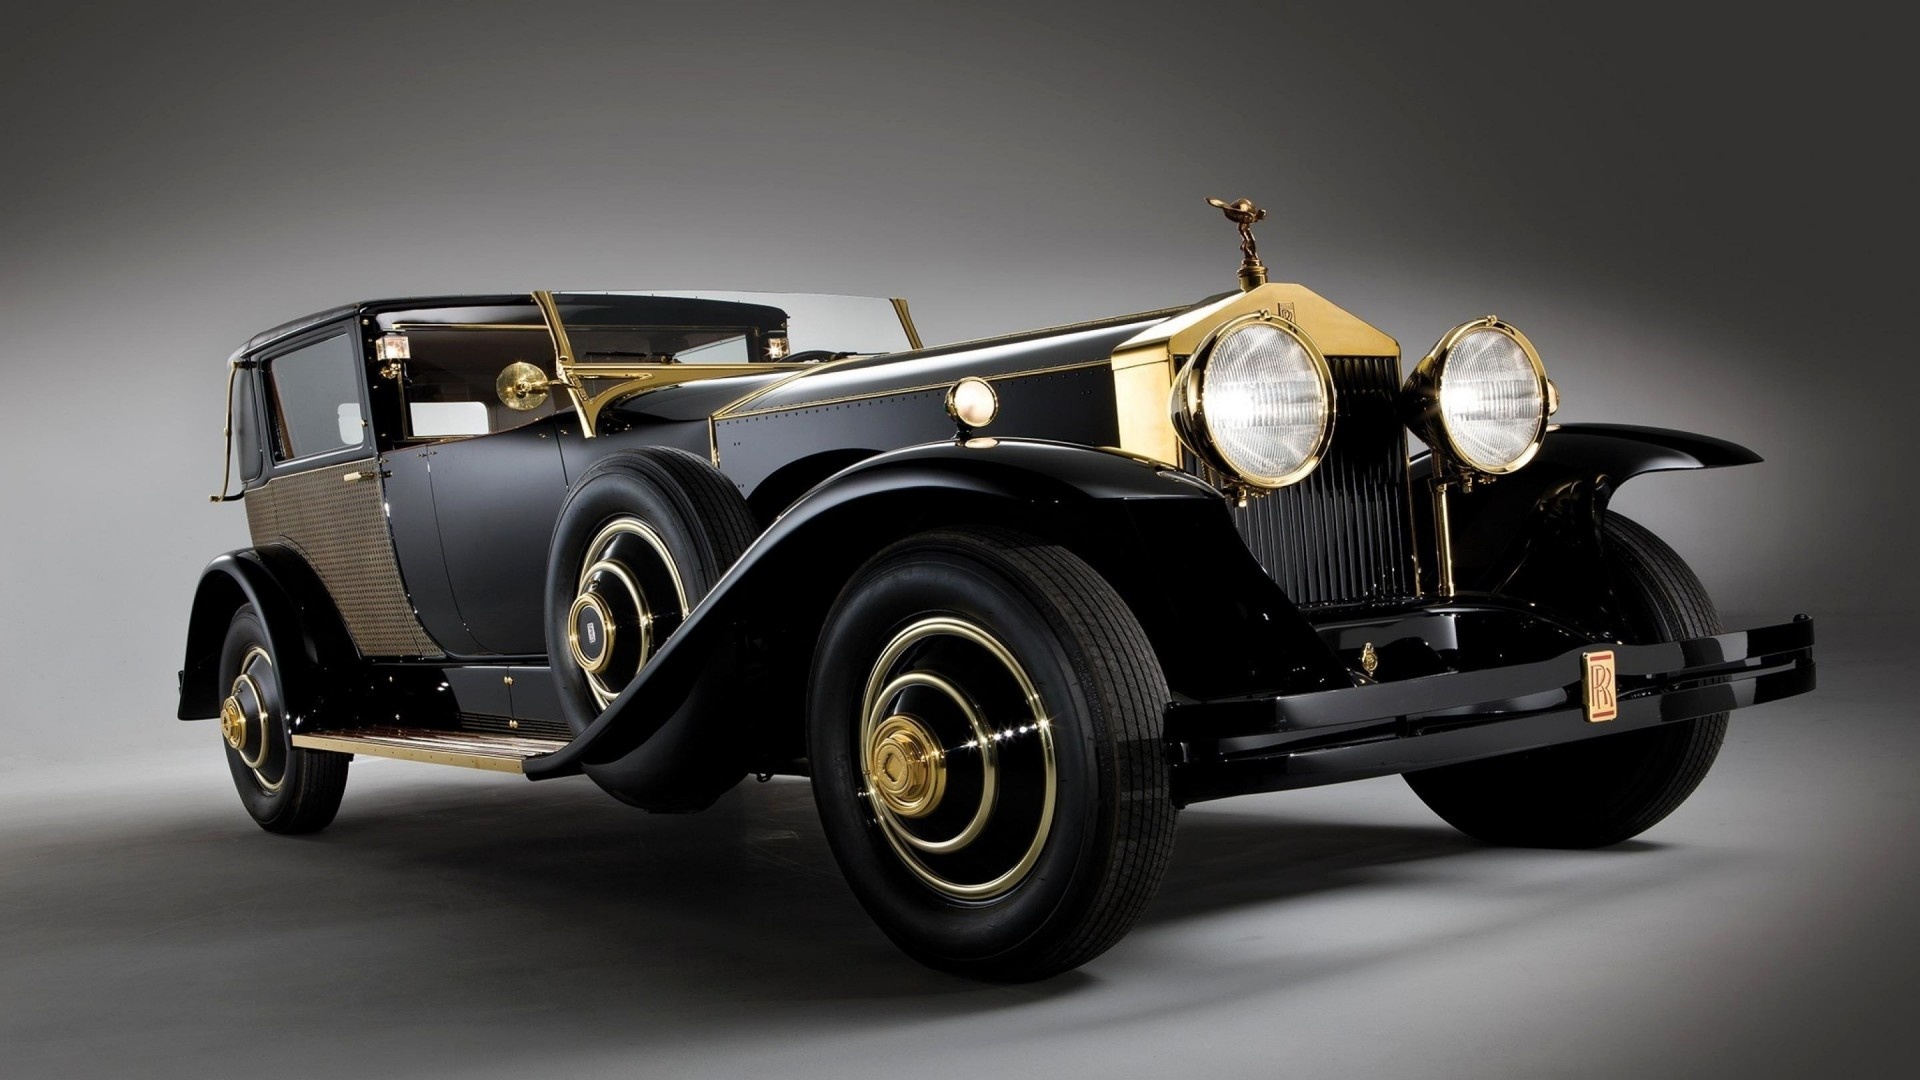 Vintage Car: Each vehicle showcasing the craftsmanship of skilled artisans. 1920x1080 Full HD Background.